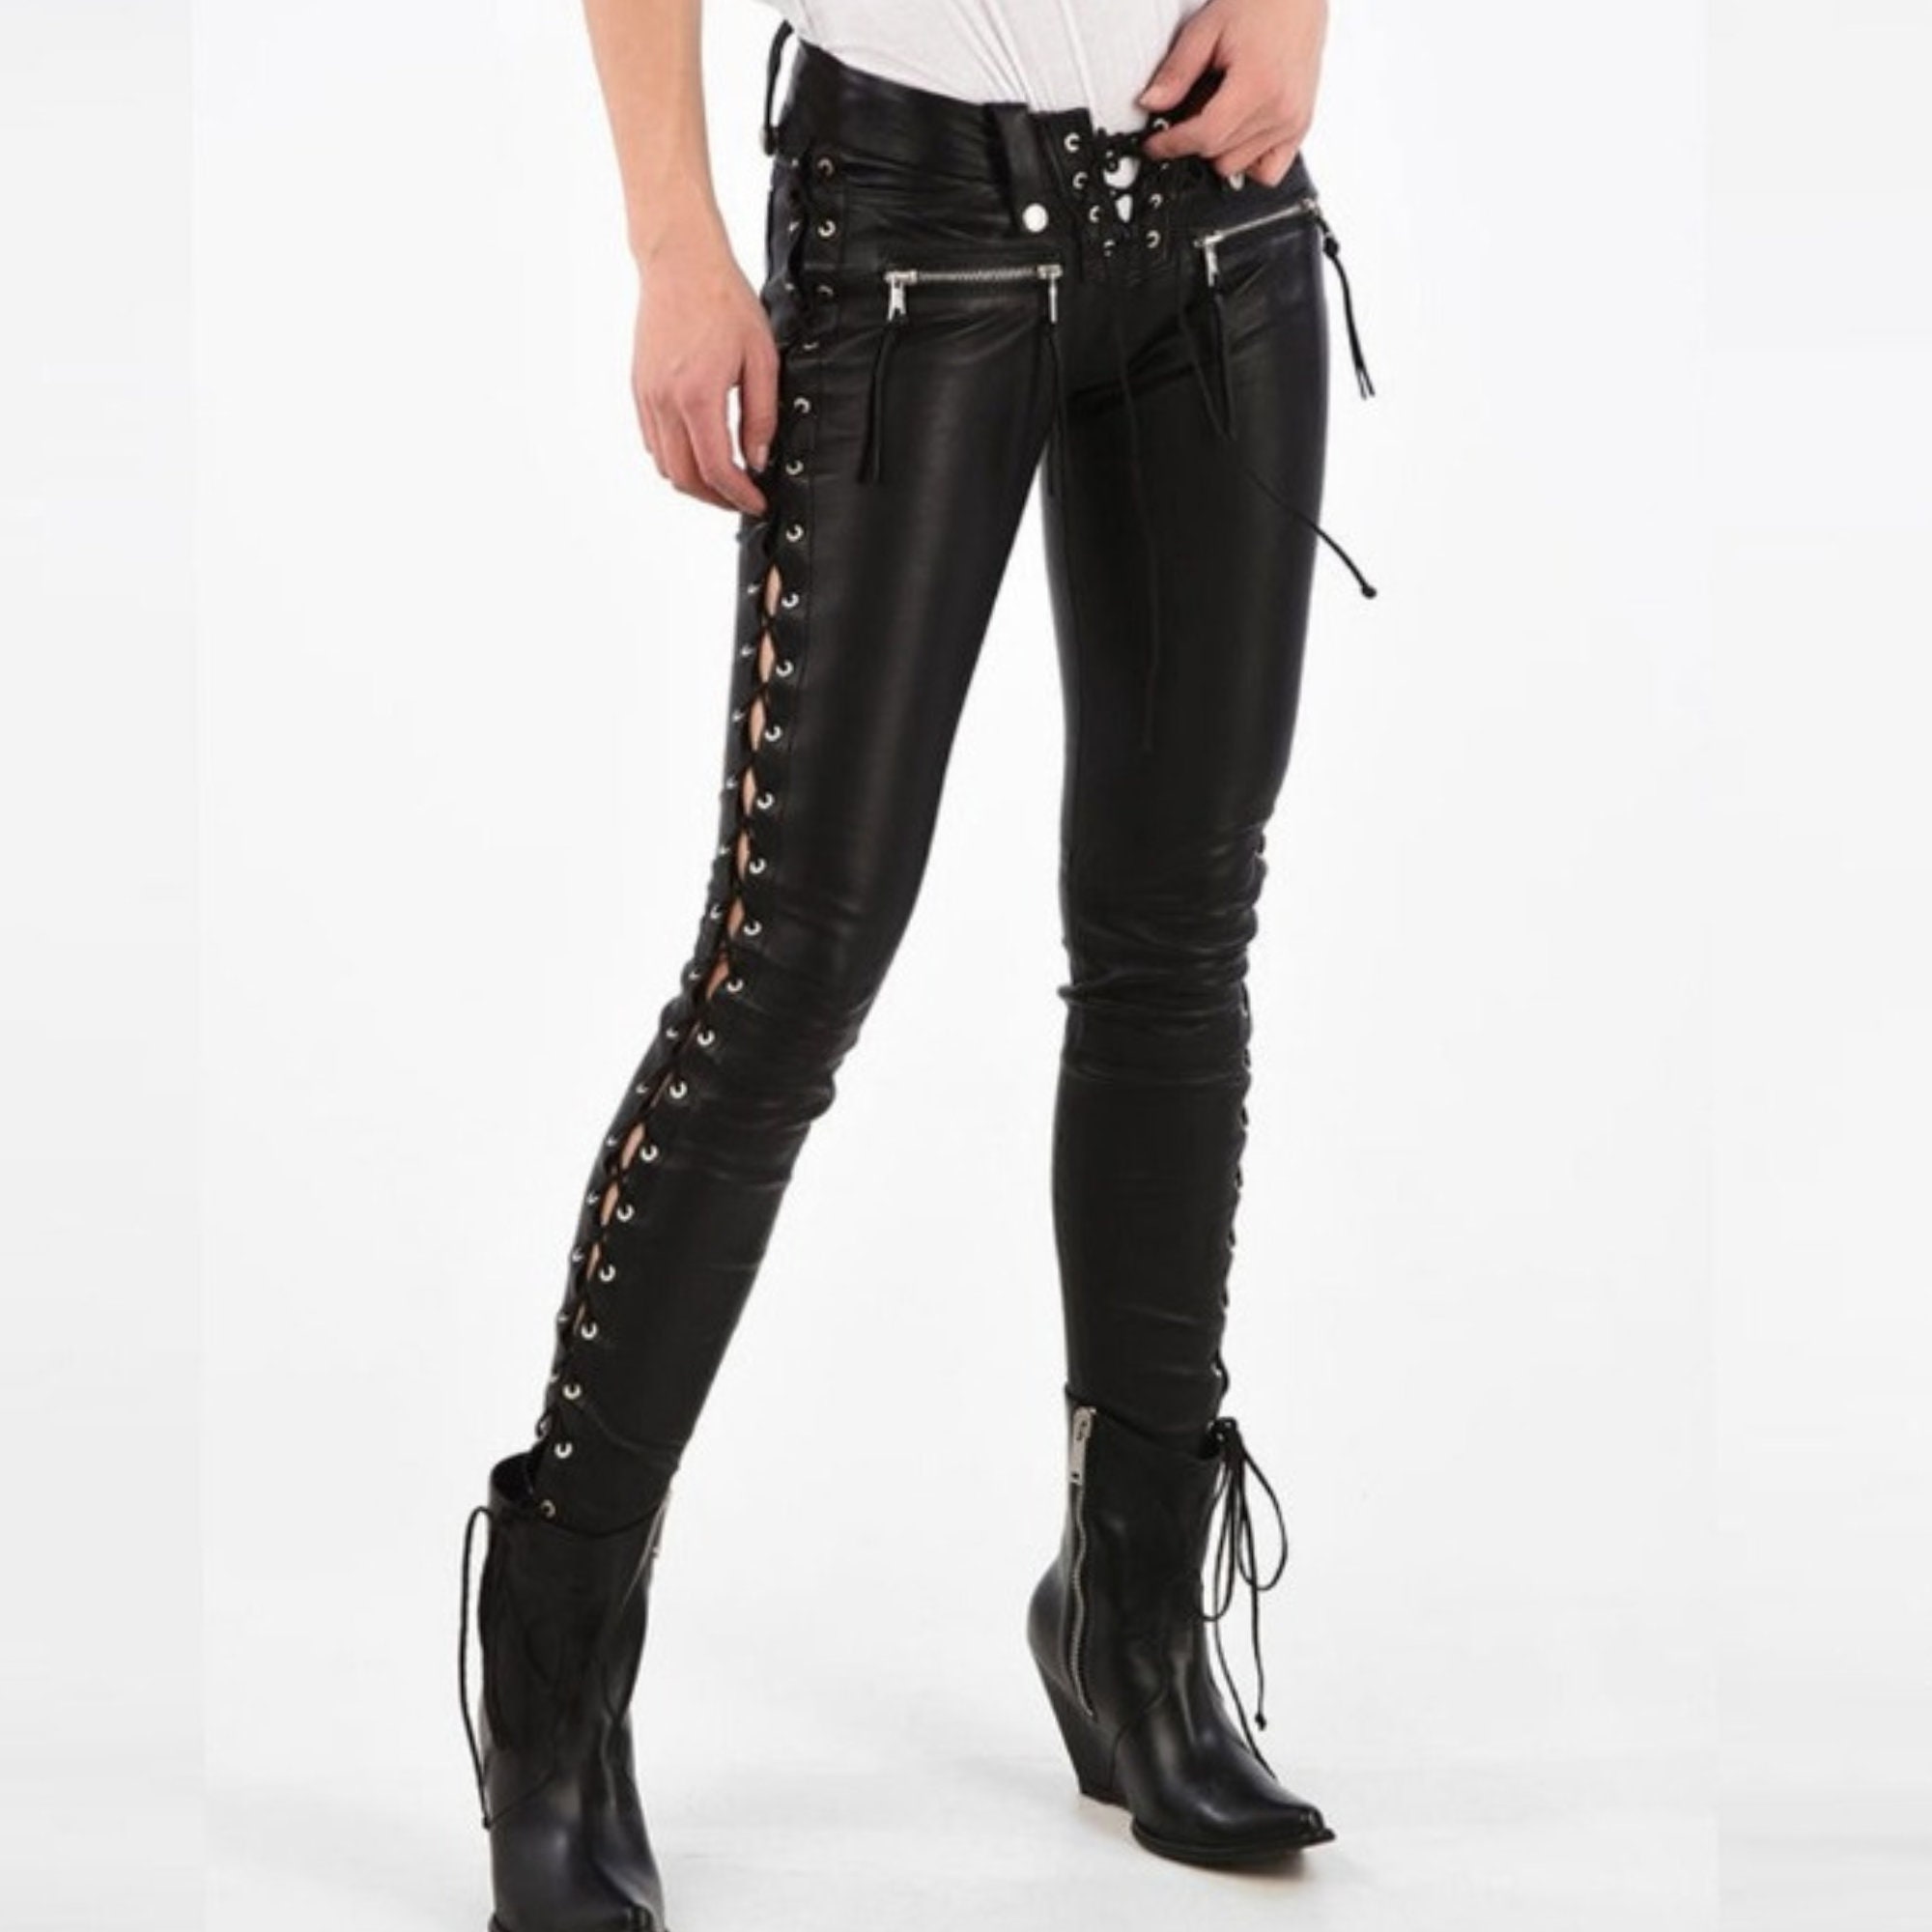 Girls Black Metallic Leggings- black leggings, black pants, black metal  pants, black metallic pants, faux leather pants, black dance pants